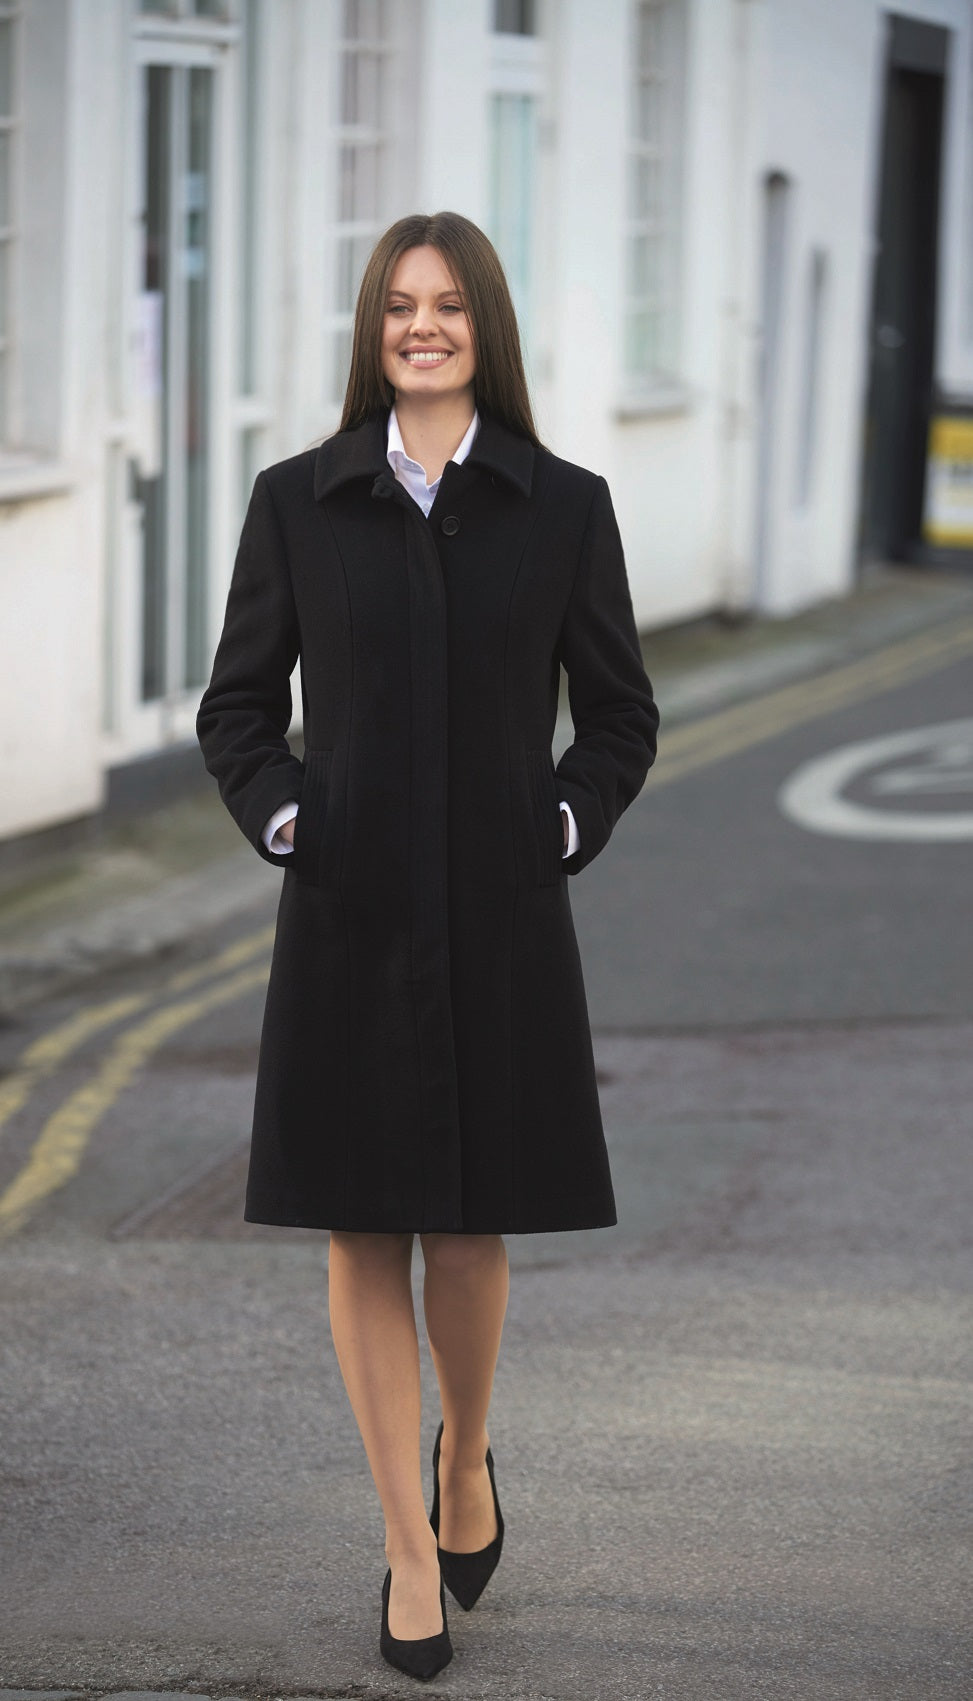 Ladies Burlington Overcoat - Fashion for Work